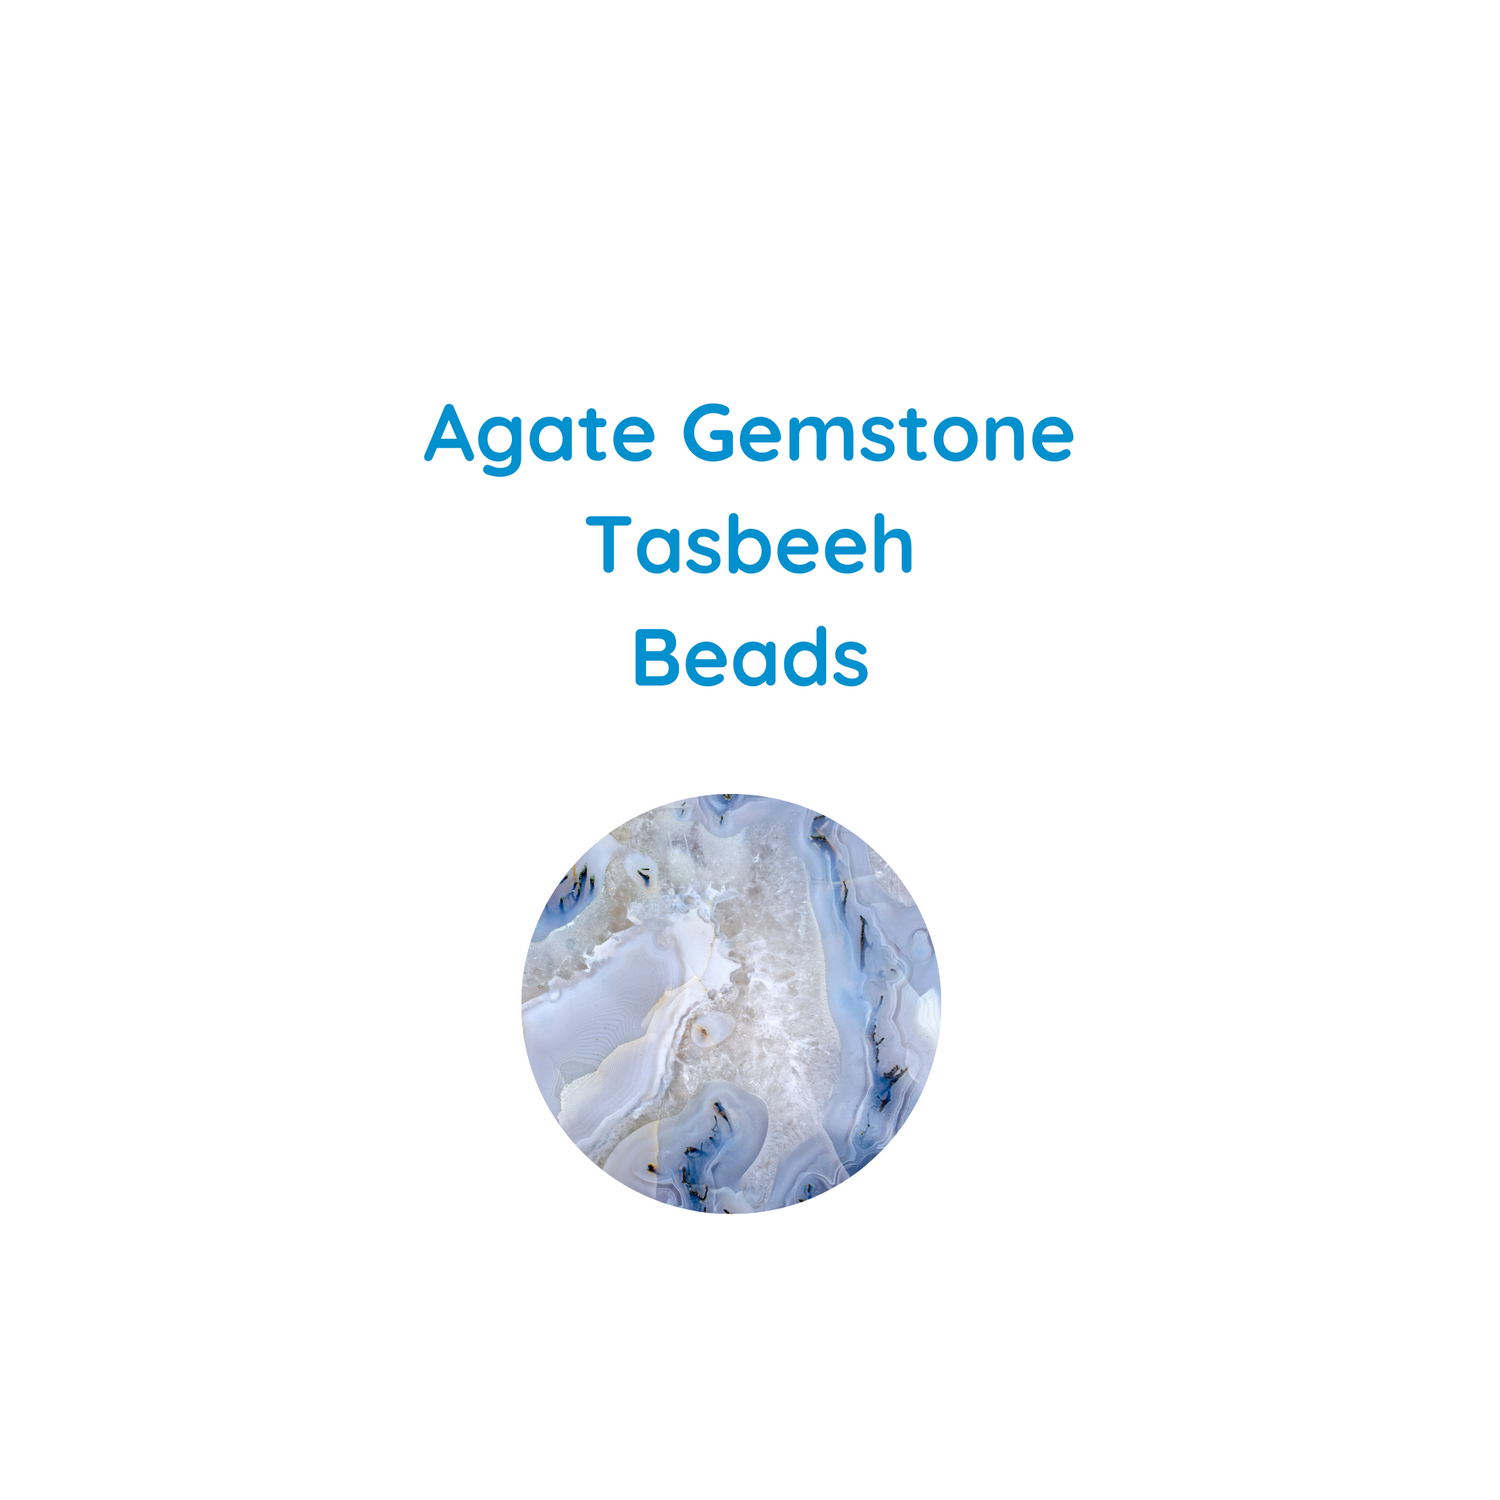 Agate Gemstone Tasbeeh Beads